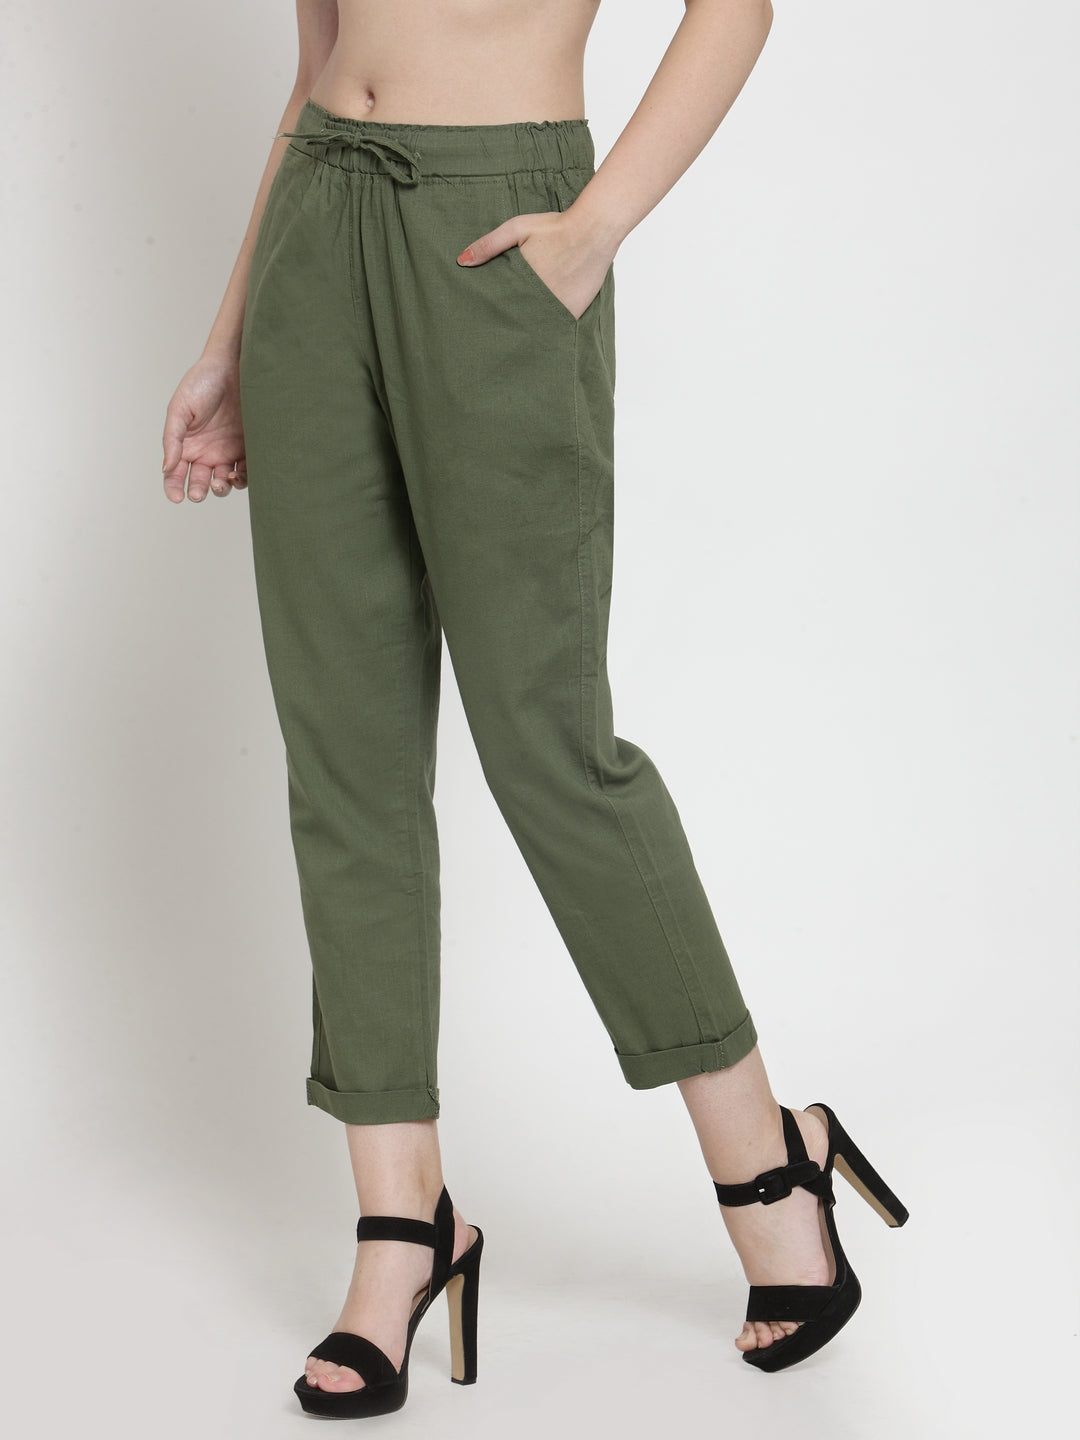 Canvas Cargo Pants - Dark khaki green - Ladies | H&M US